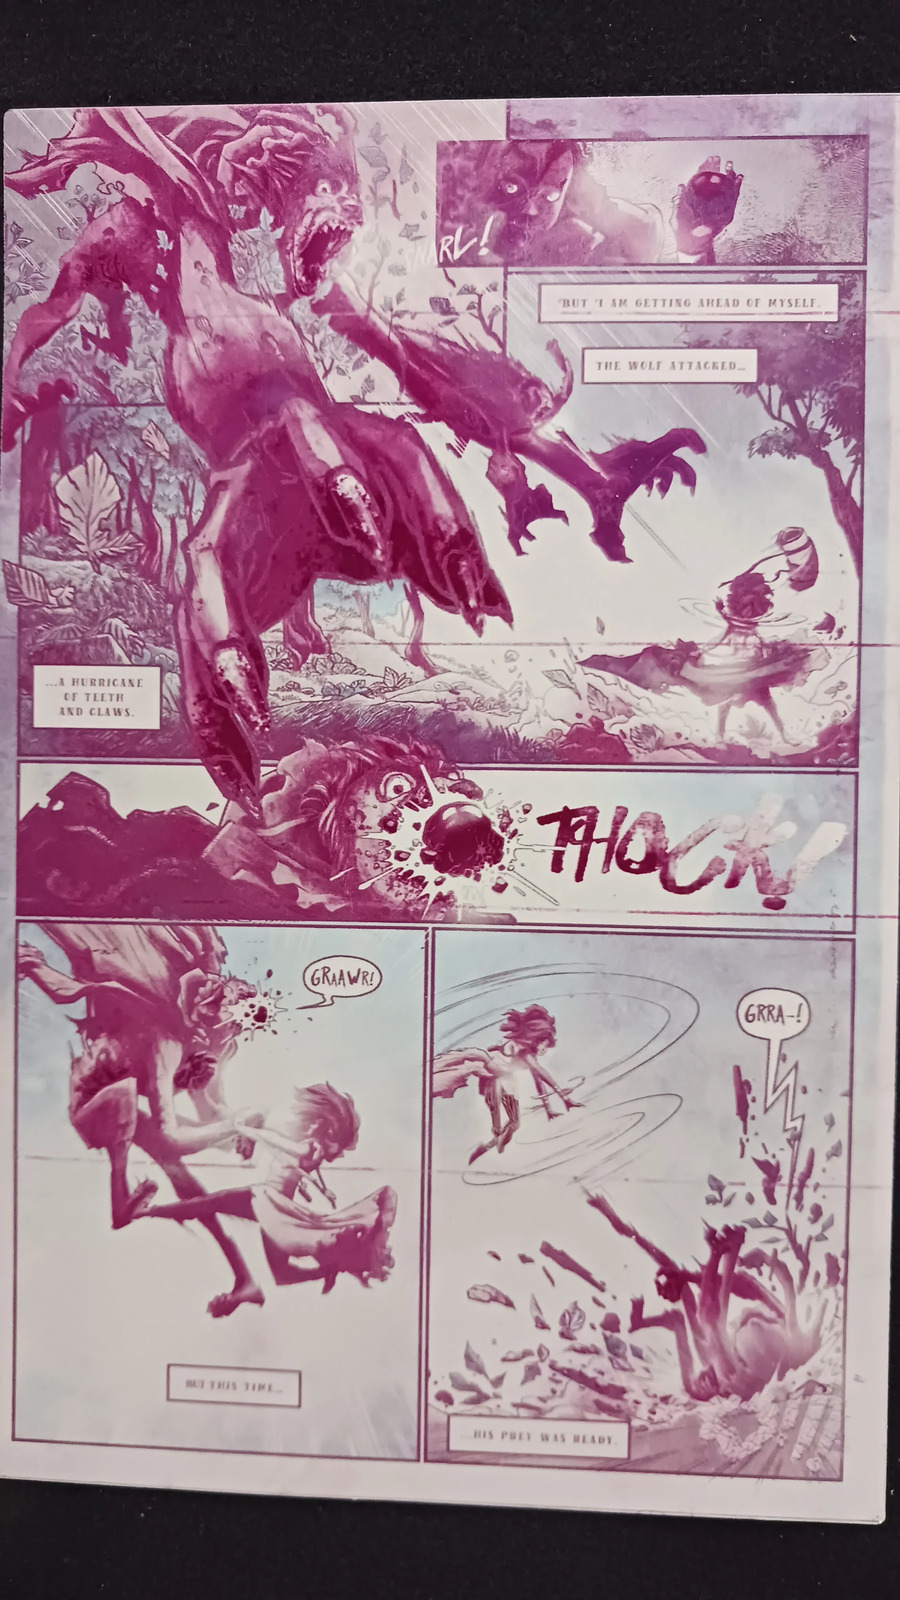 Snow White Zombie Apocalypse #1 - Page 7 - PRESSWORKS - Comic Art - Printer Plat